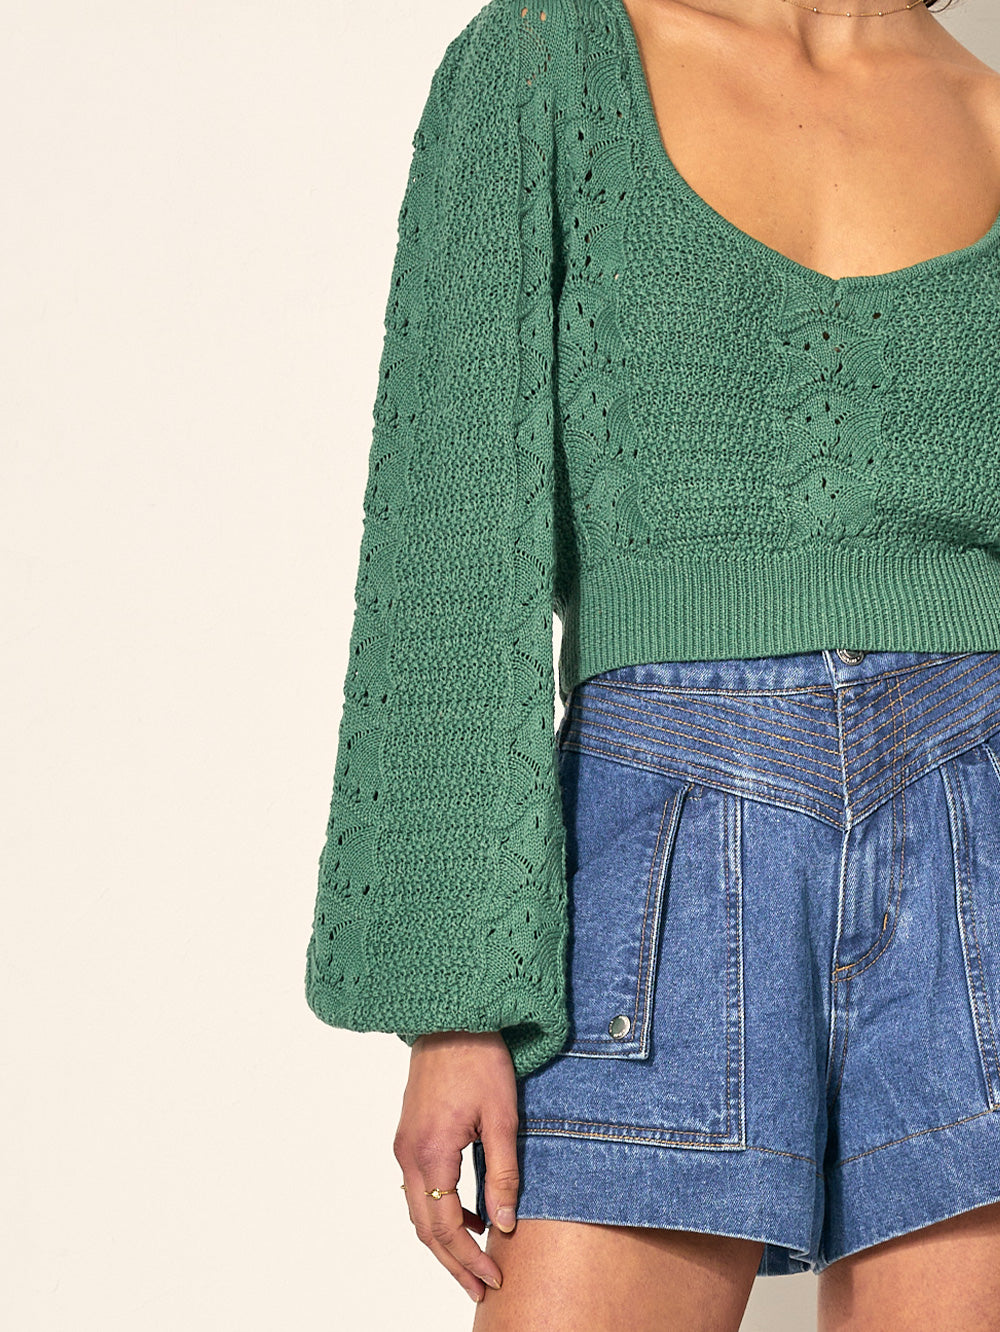 Helena Knit Top - Emerald